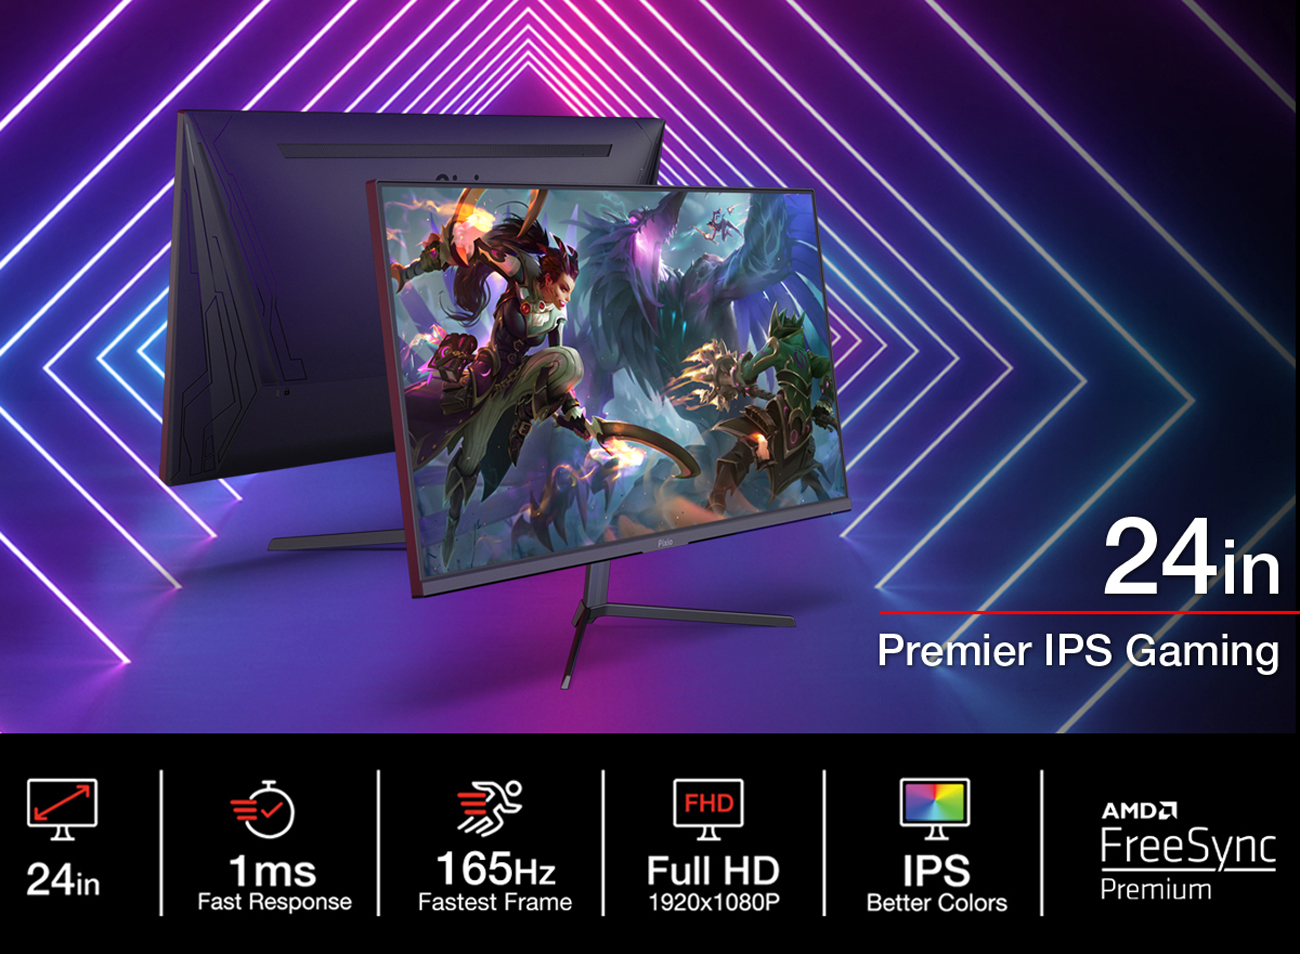 Pixio PX248 Prime | 24 inch 1080p 144Hz 1ms IPS Gaming Monitor